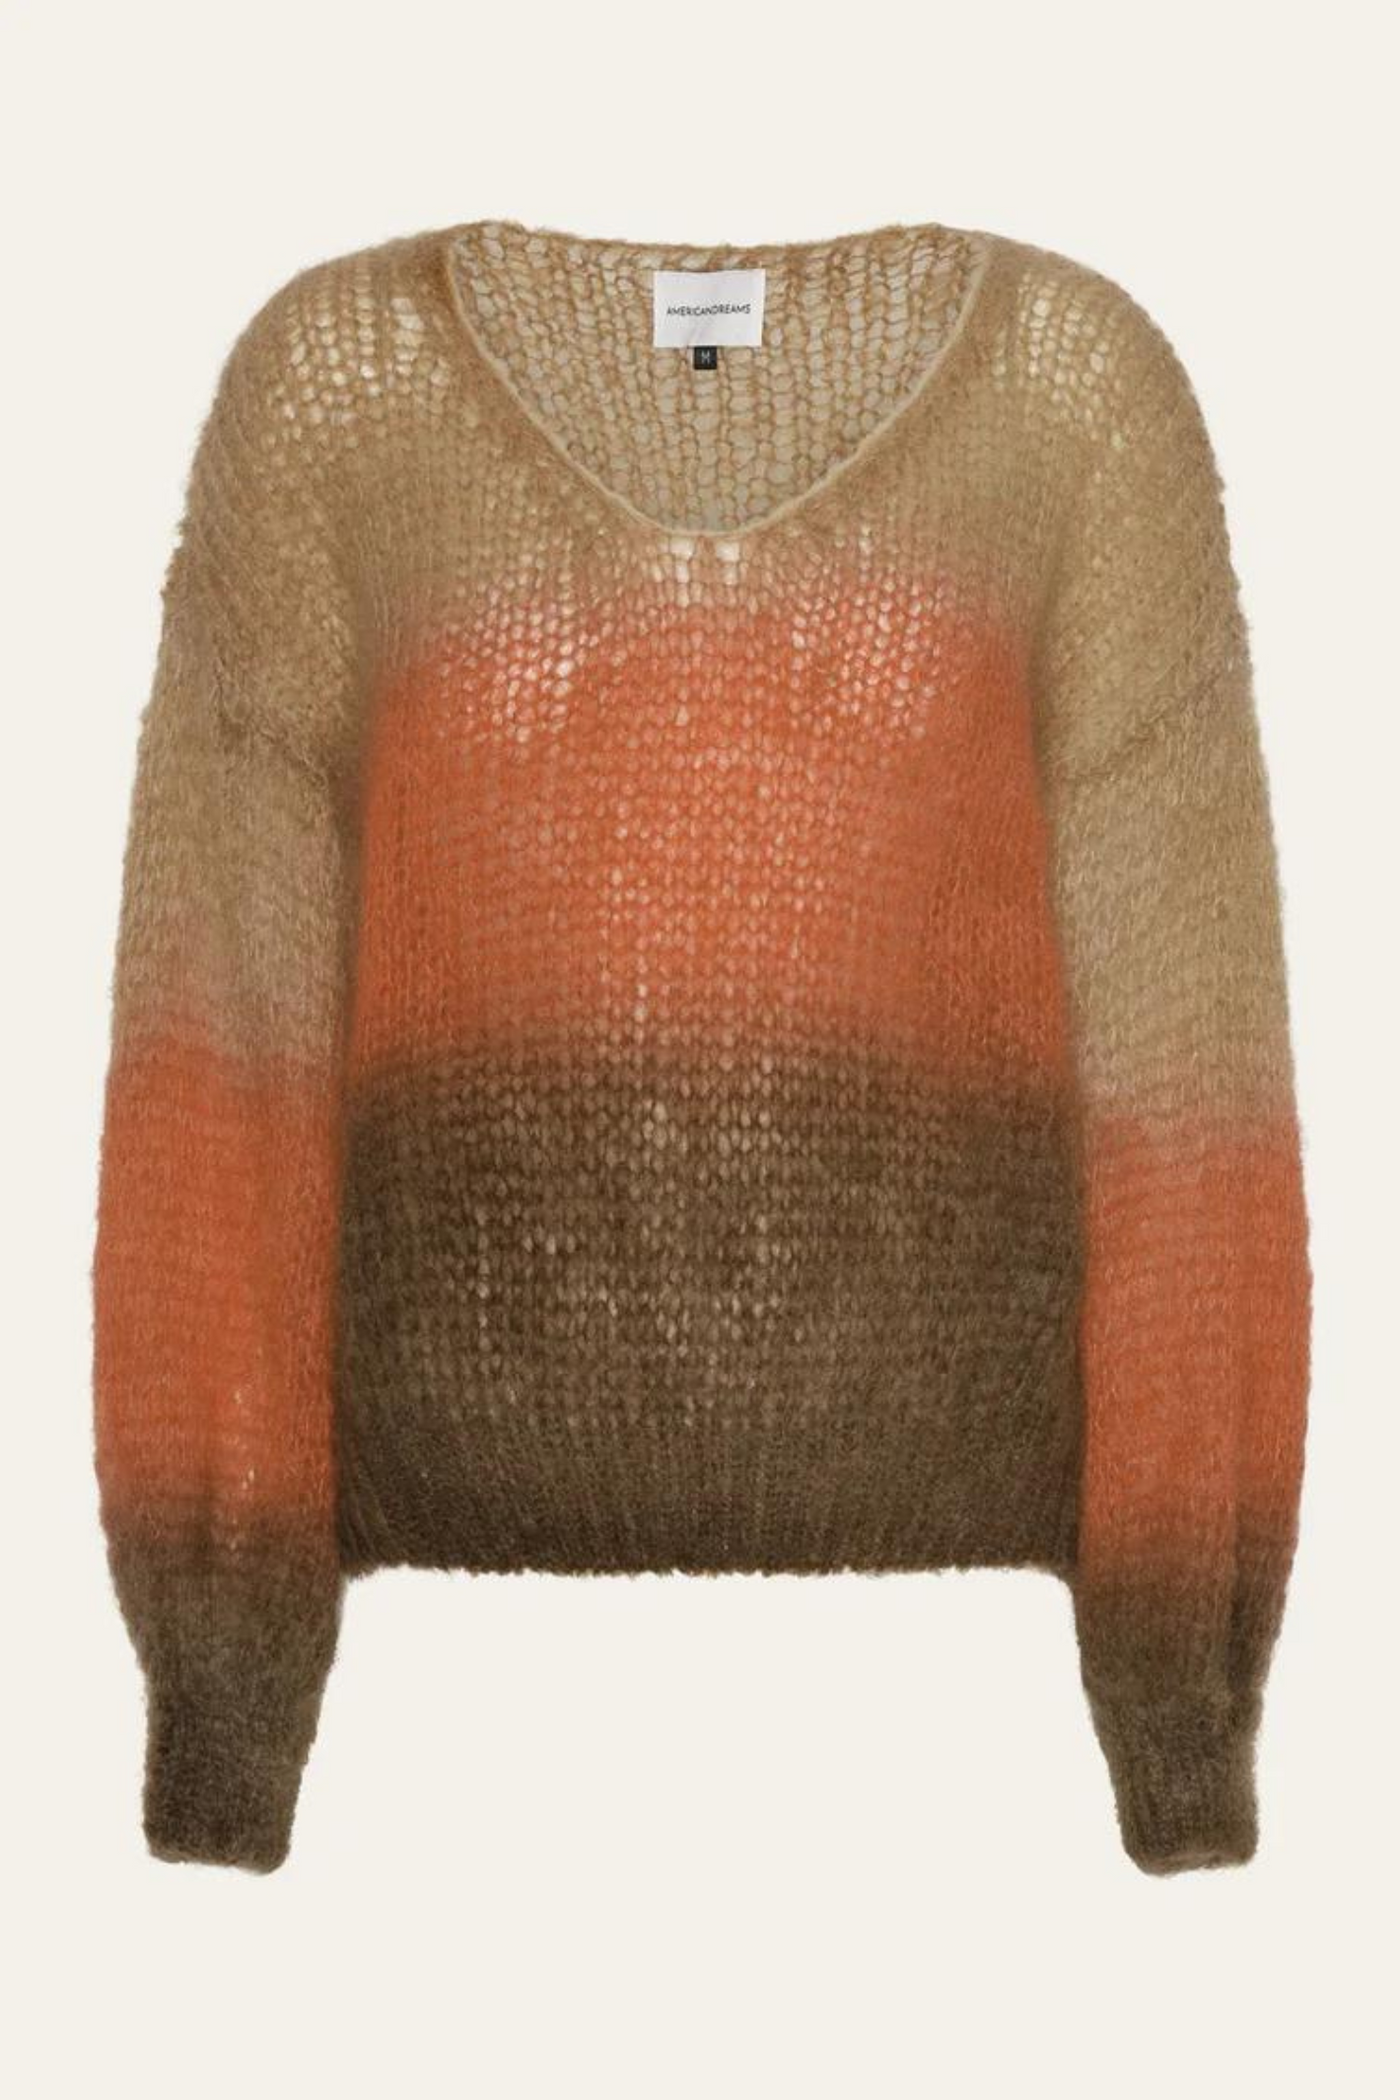 Americandreams Milana Mohair Sweater AD1002  Orange Ombre